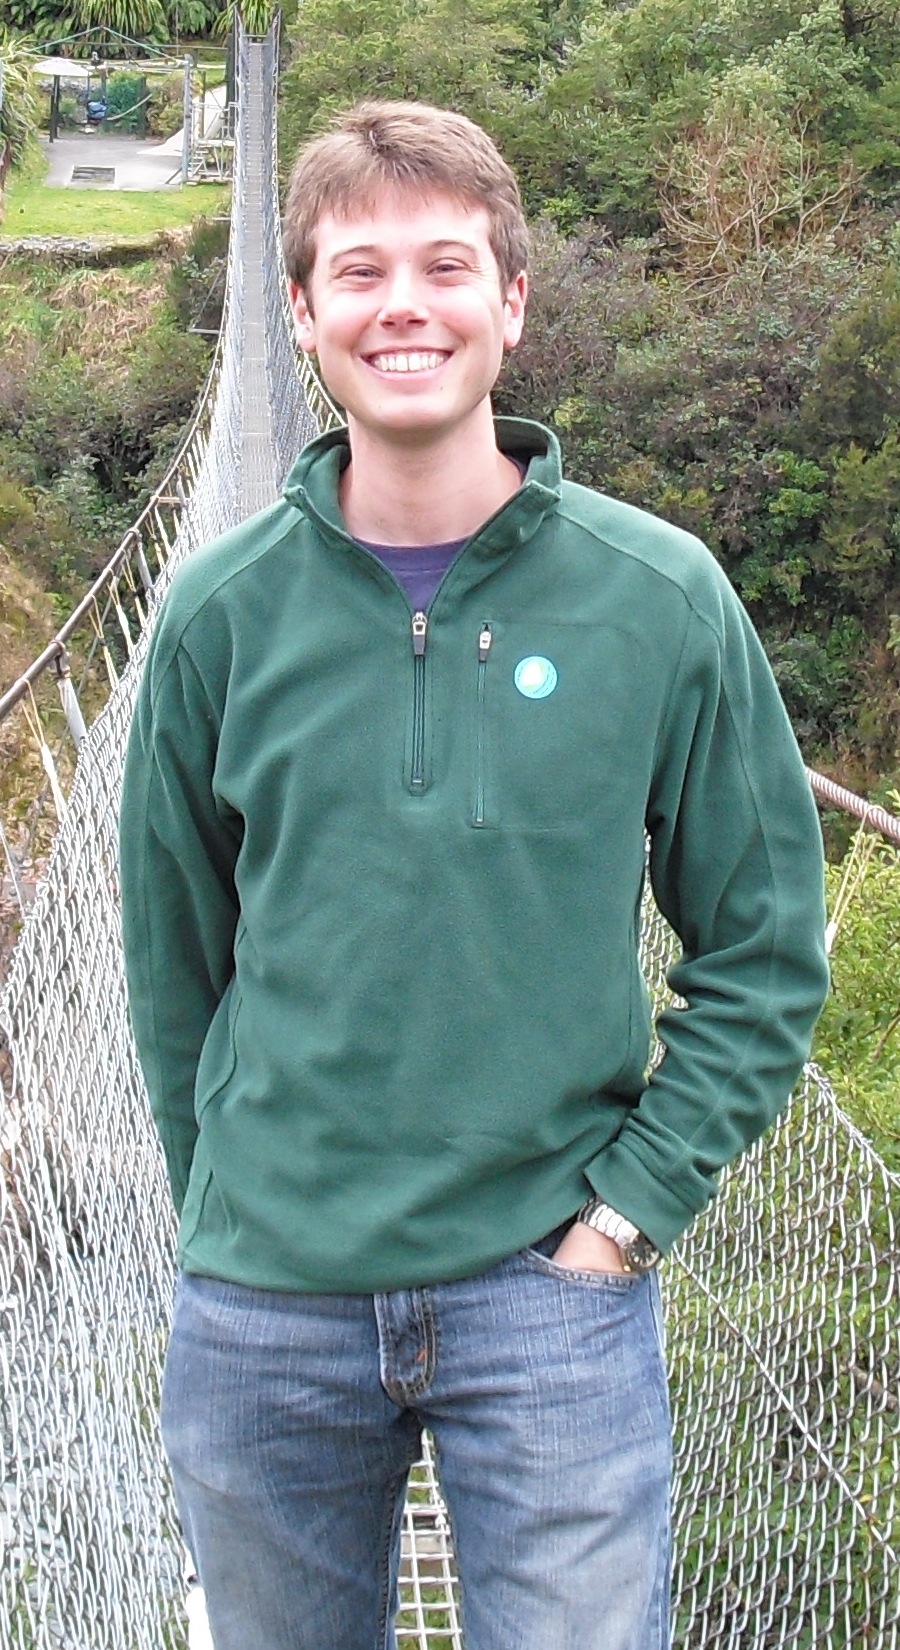 On the Buller Gorge Swingbridge, New Zealand, August 2009.